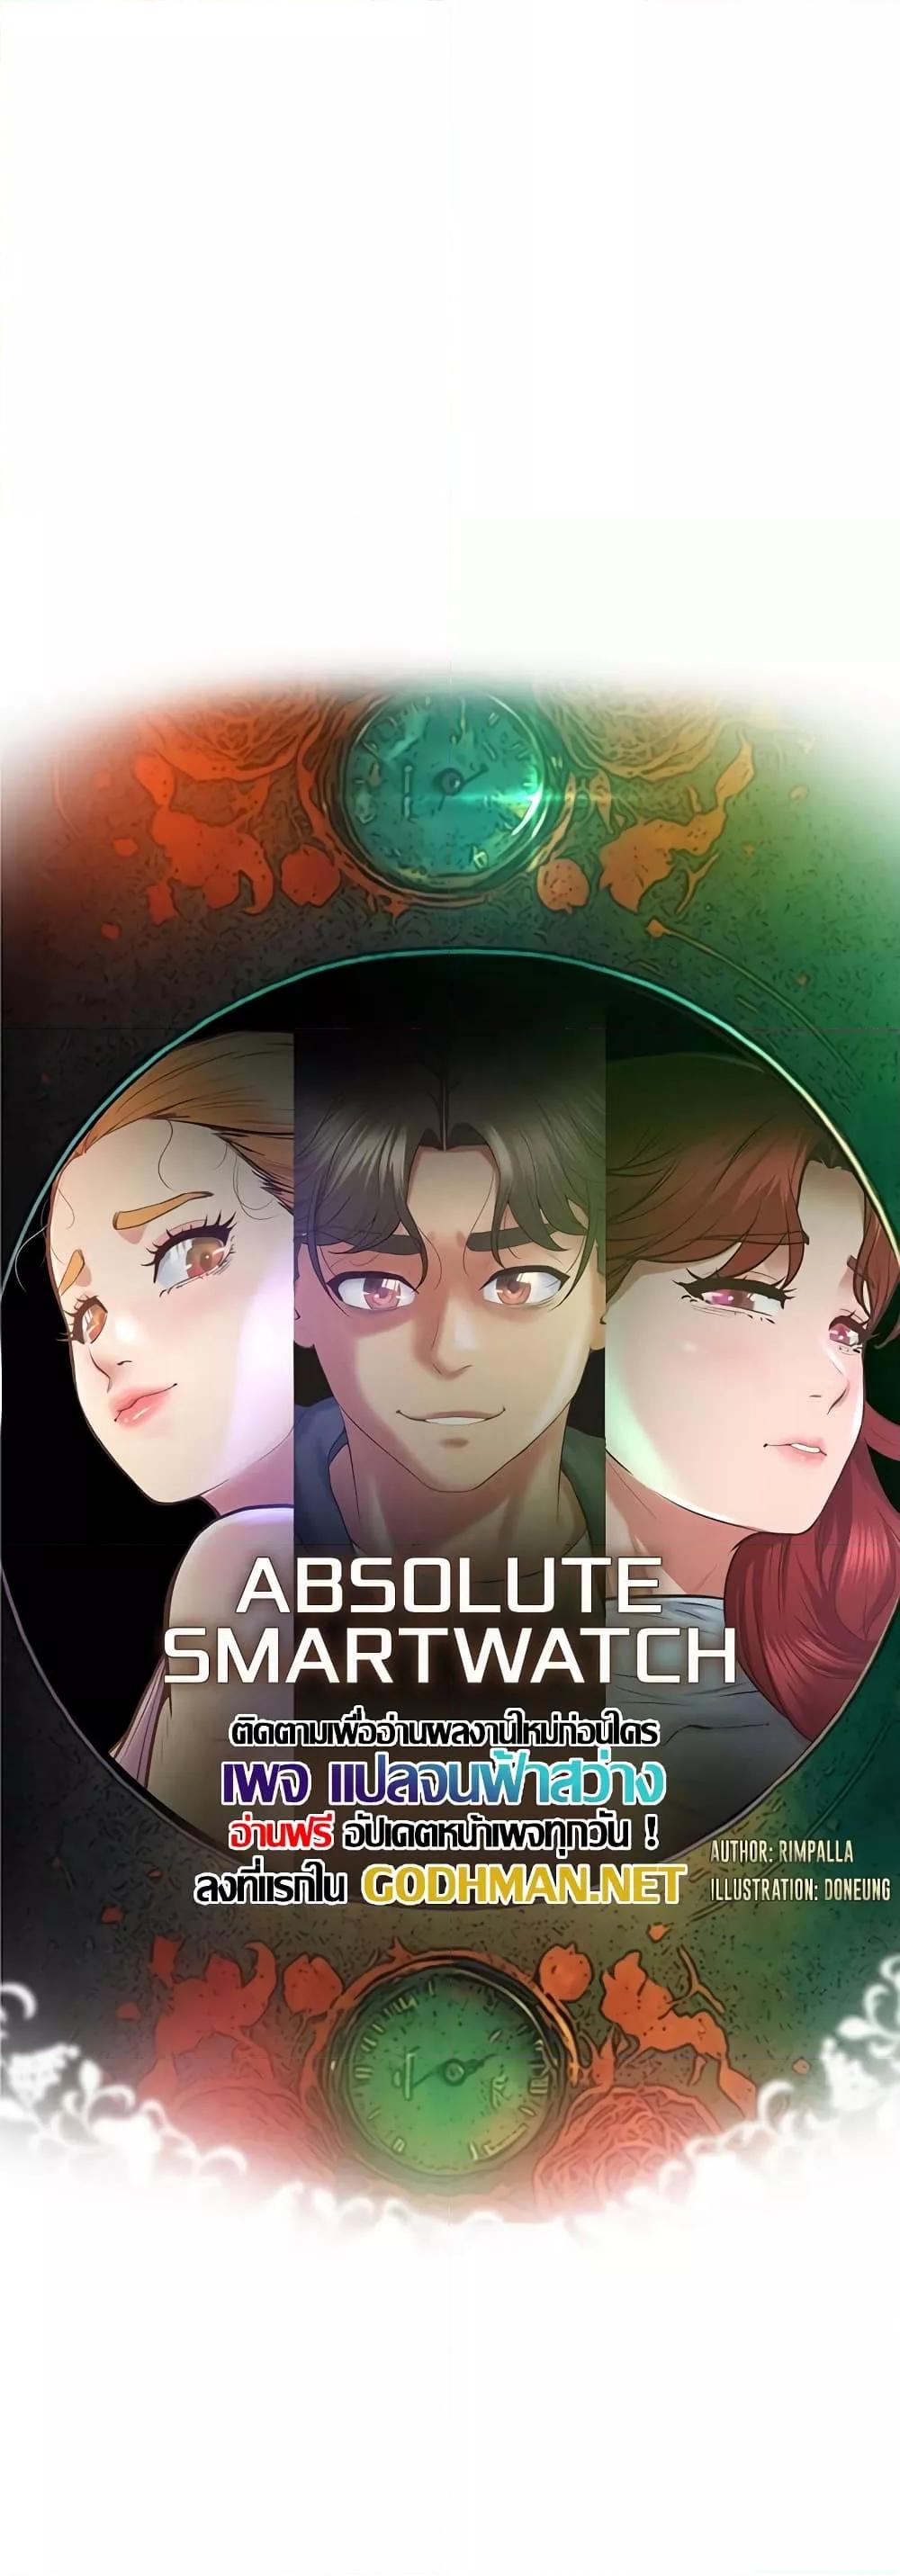 Absolute Smartwatch 6 25